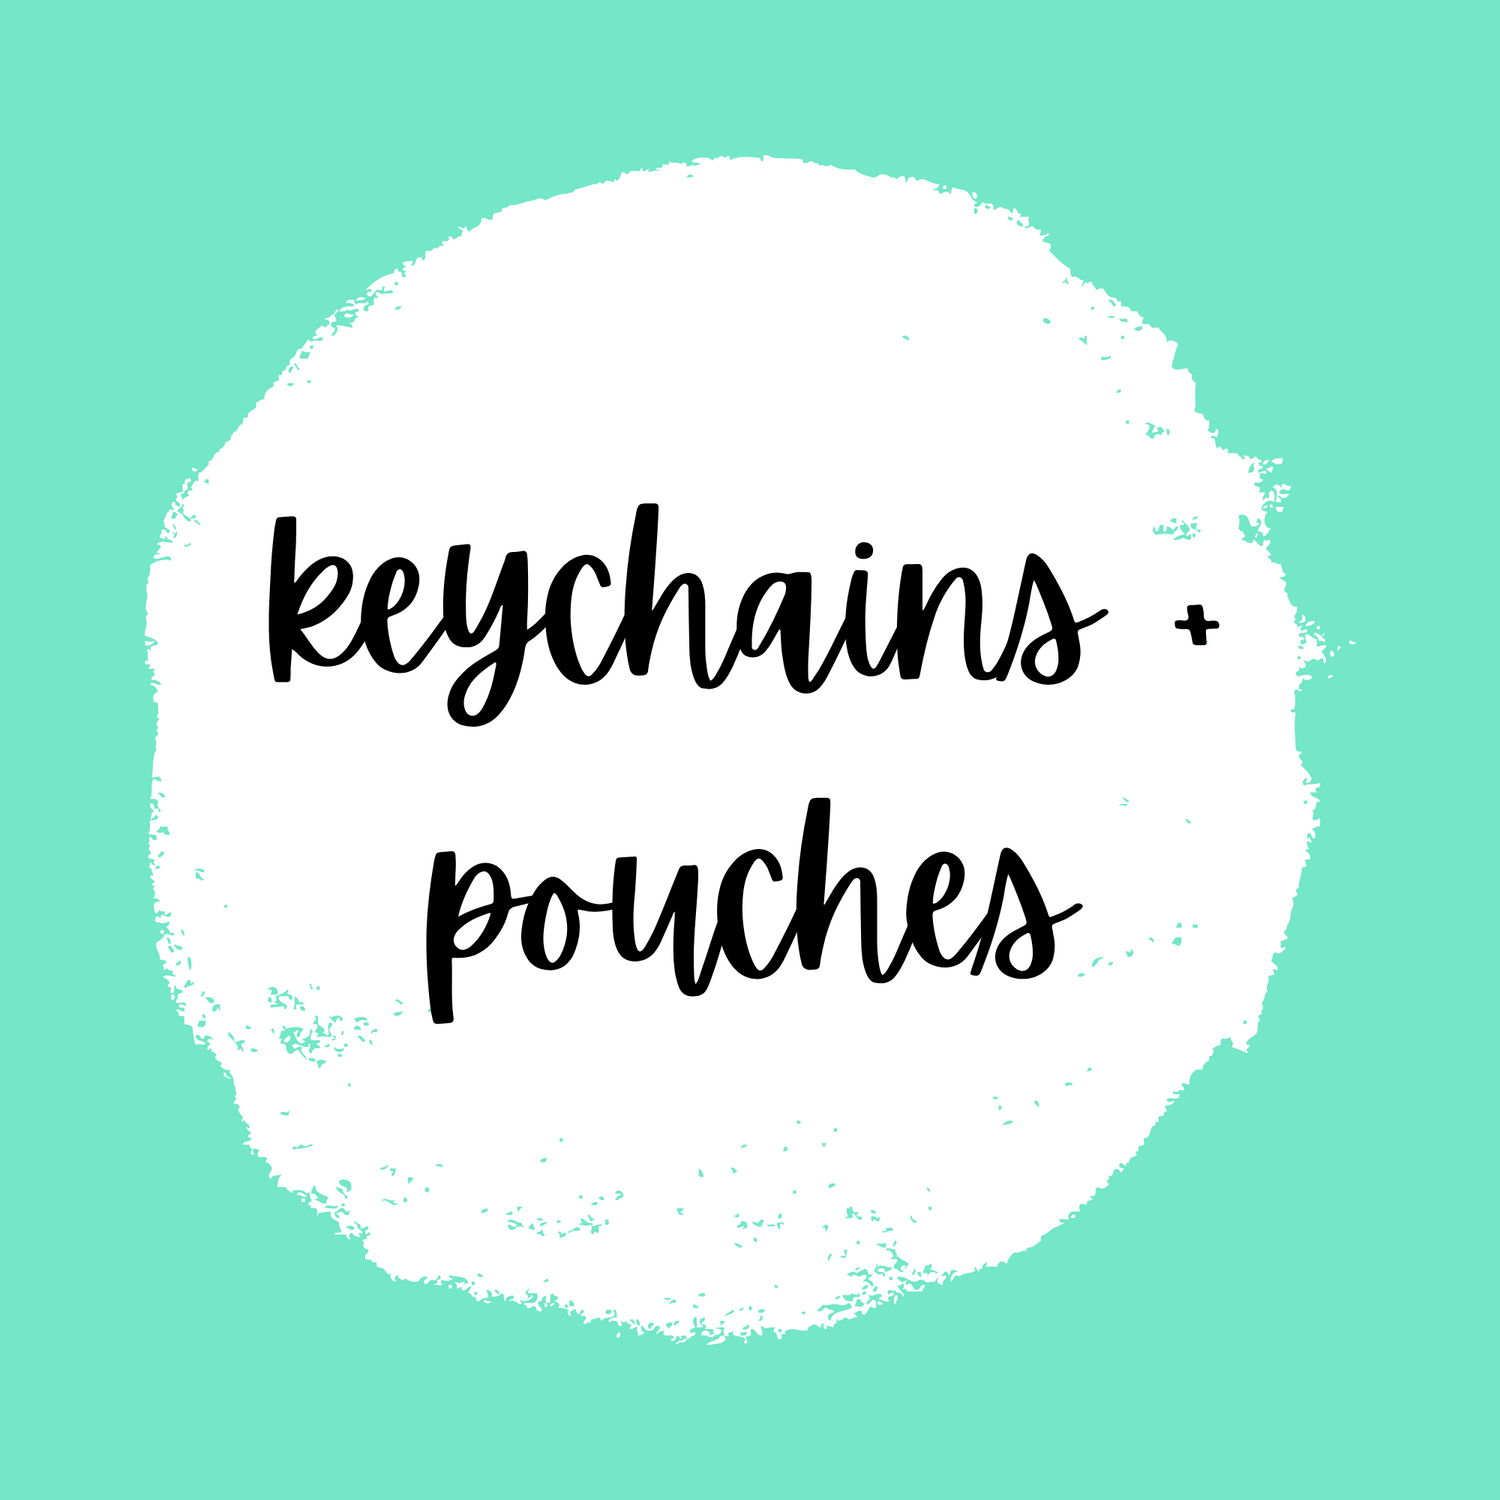 Keychains + Pouches